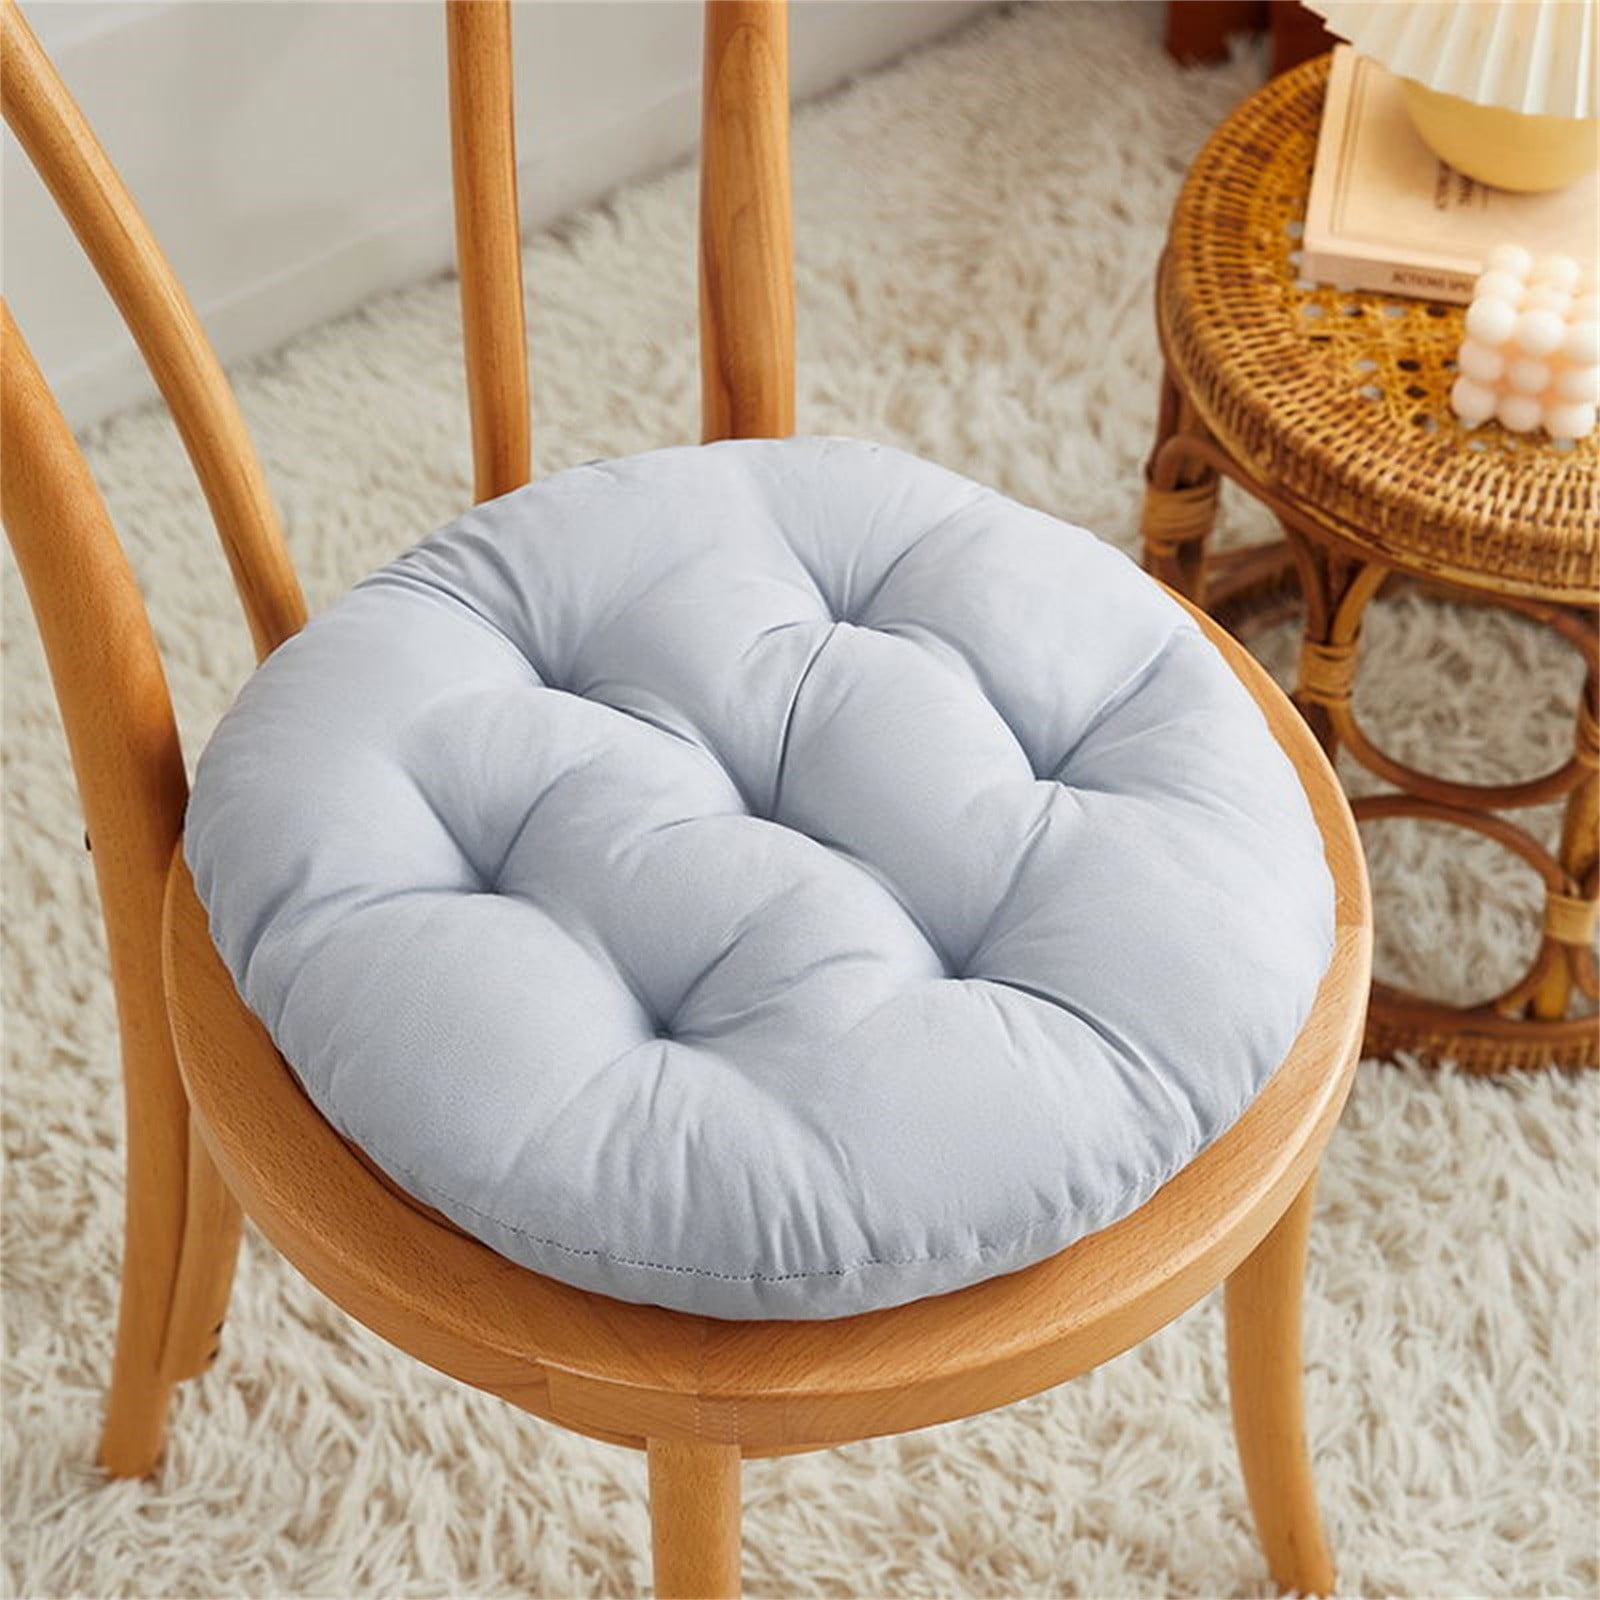  Holiberty Cute Crown Chair Cushions Foam Stuffed Desk